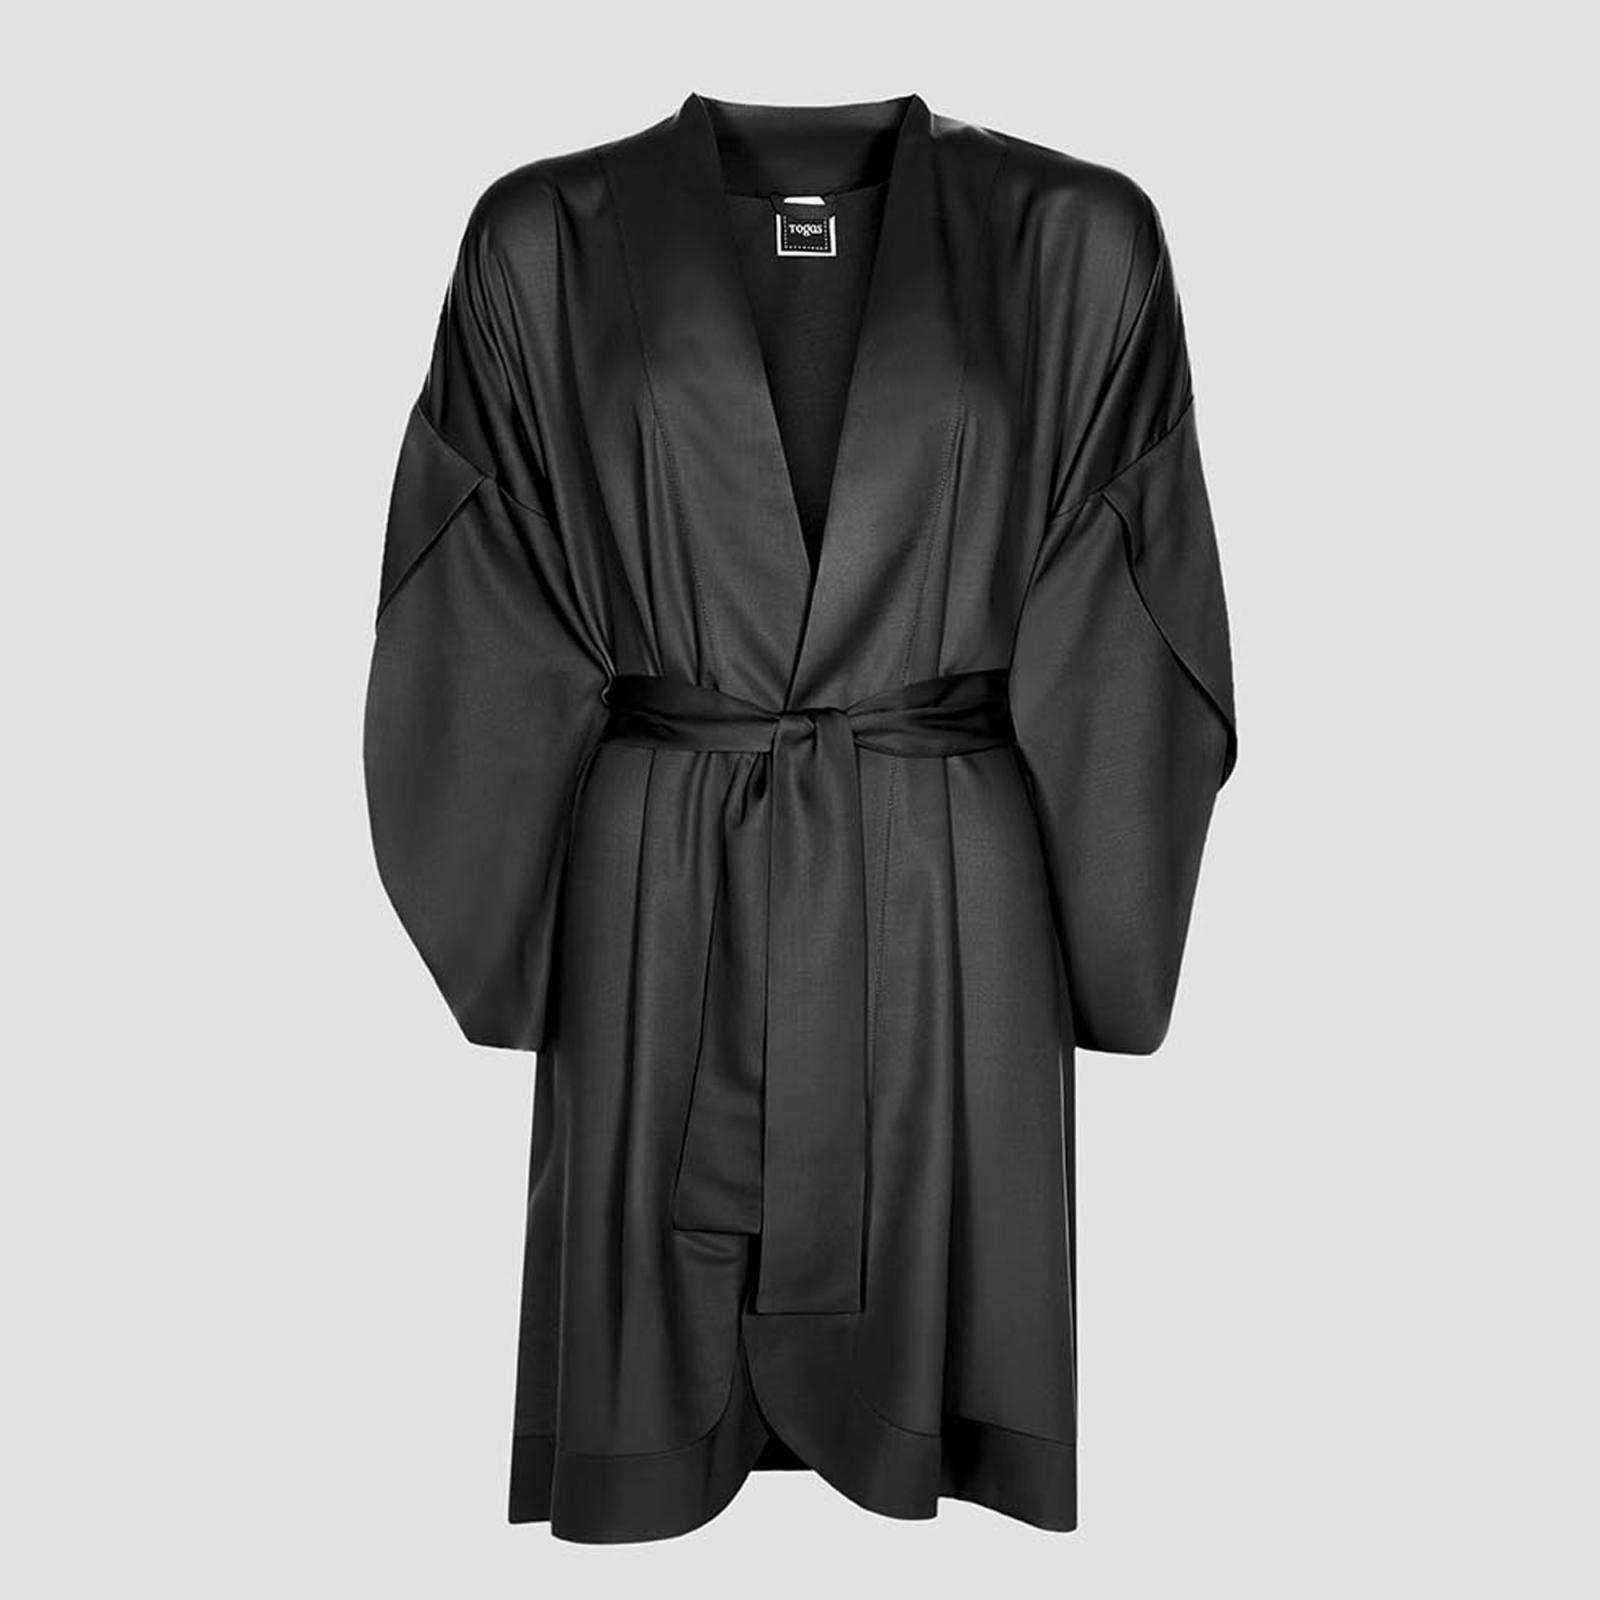 Халат-кимоно короткое Togas Наоми чёрное S (44) халат кимоно короткое togas наоми чёрное l 48